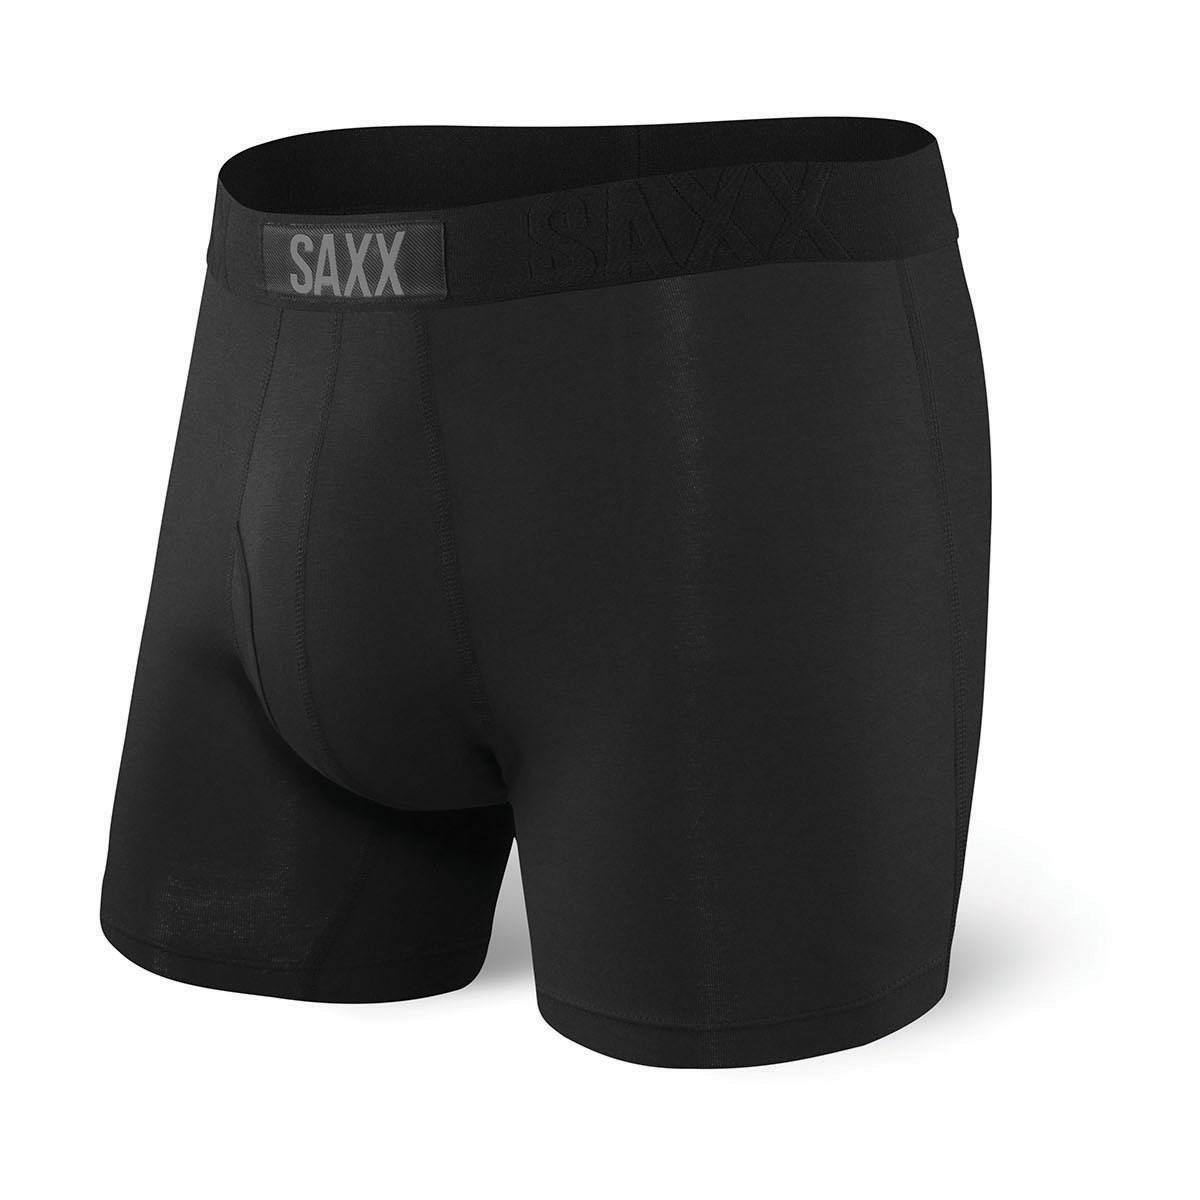 Saxx Ultra Boxer Brief Fly - Men's - Black / Black